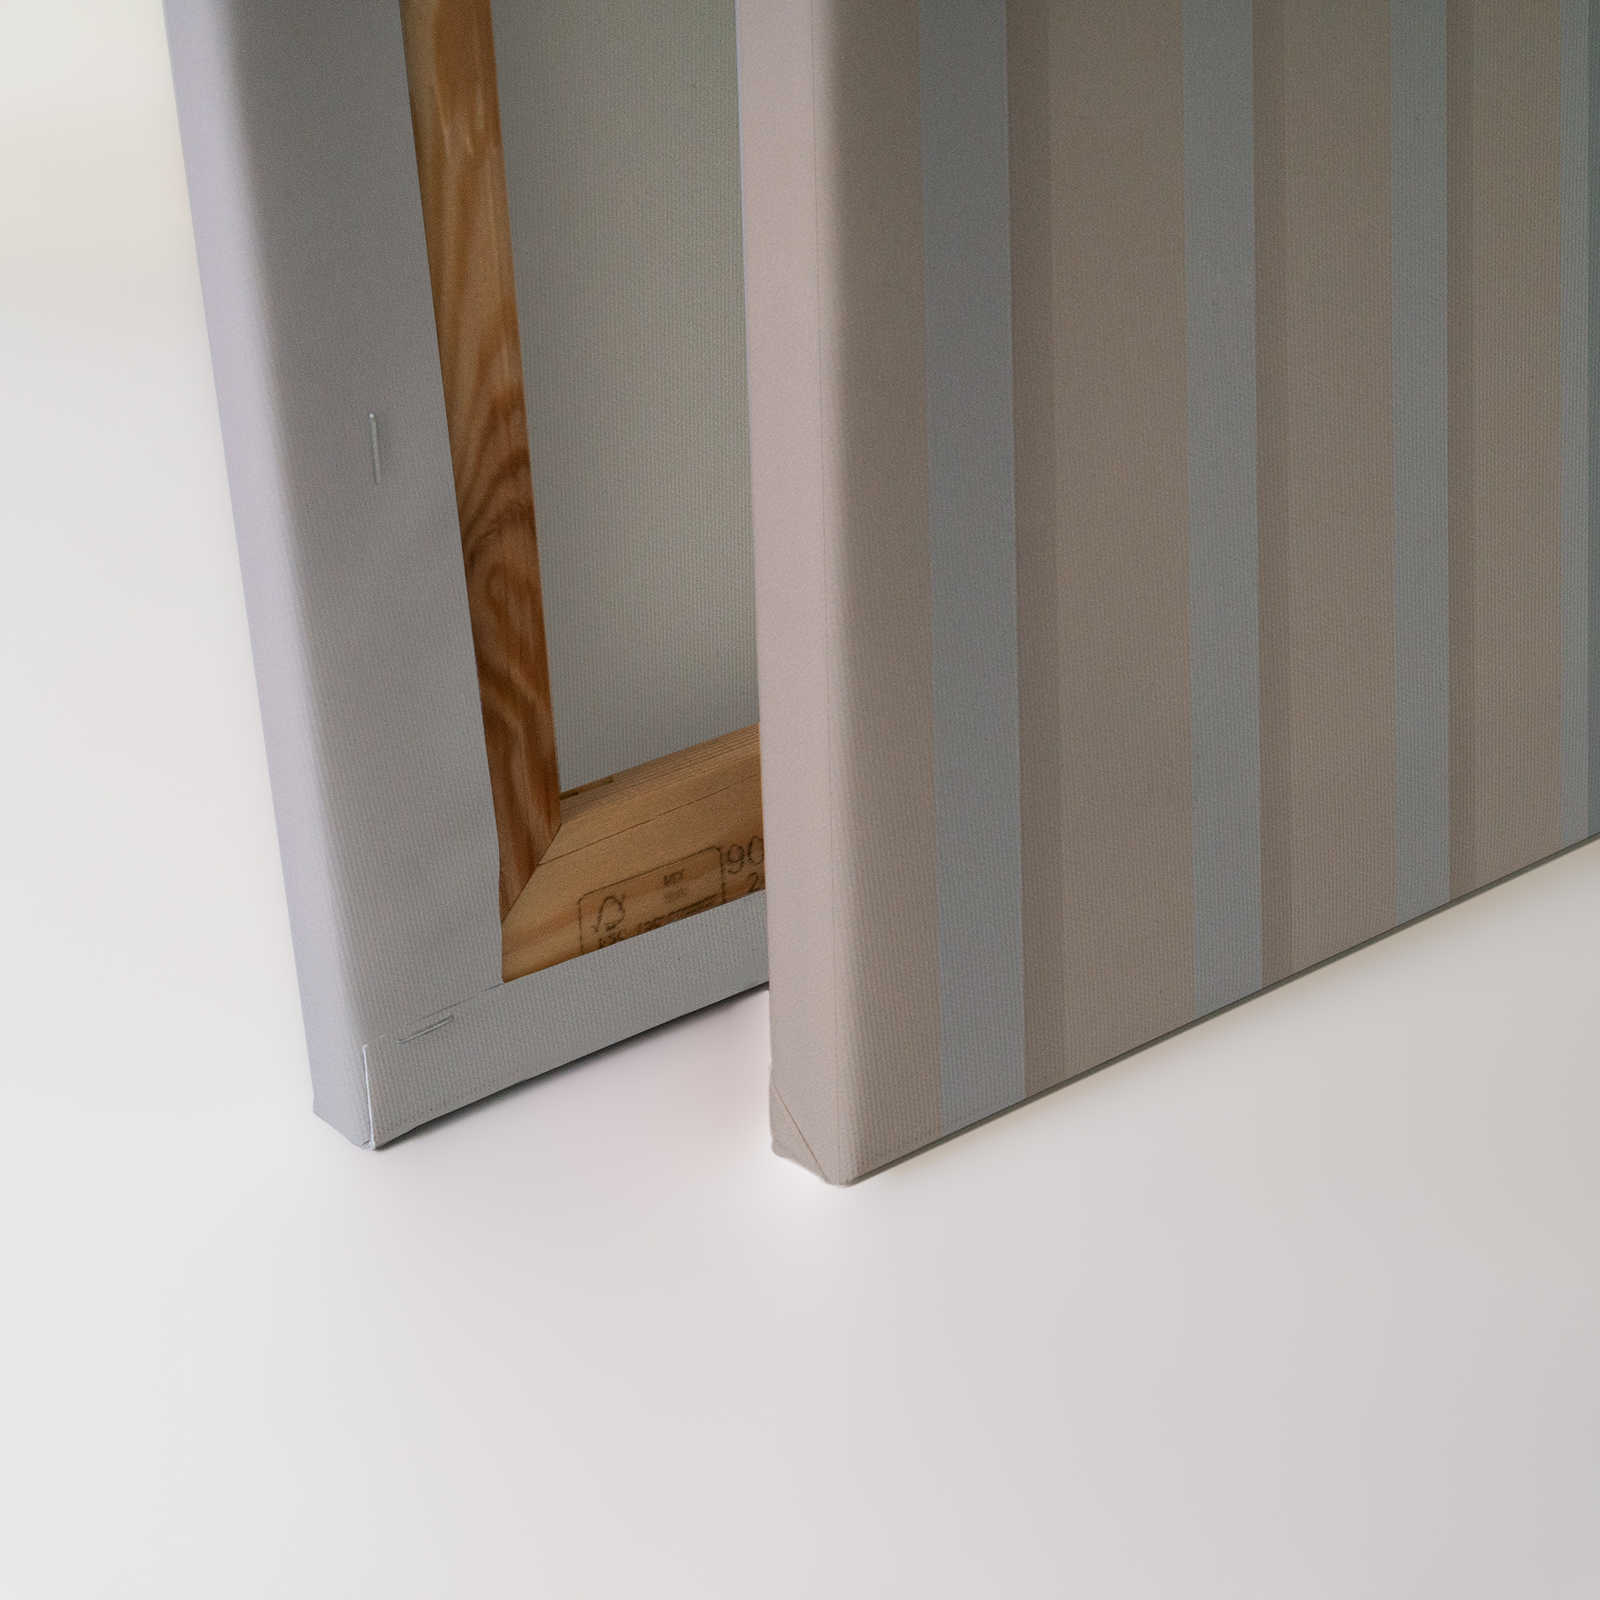             Illusion Room 2 - Canvas painting 3D Stripe Design in Blue & Grey - 1.20 m x 0.80 m
        